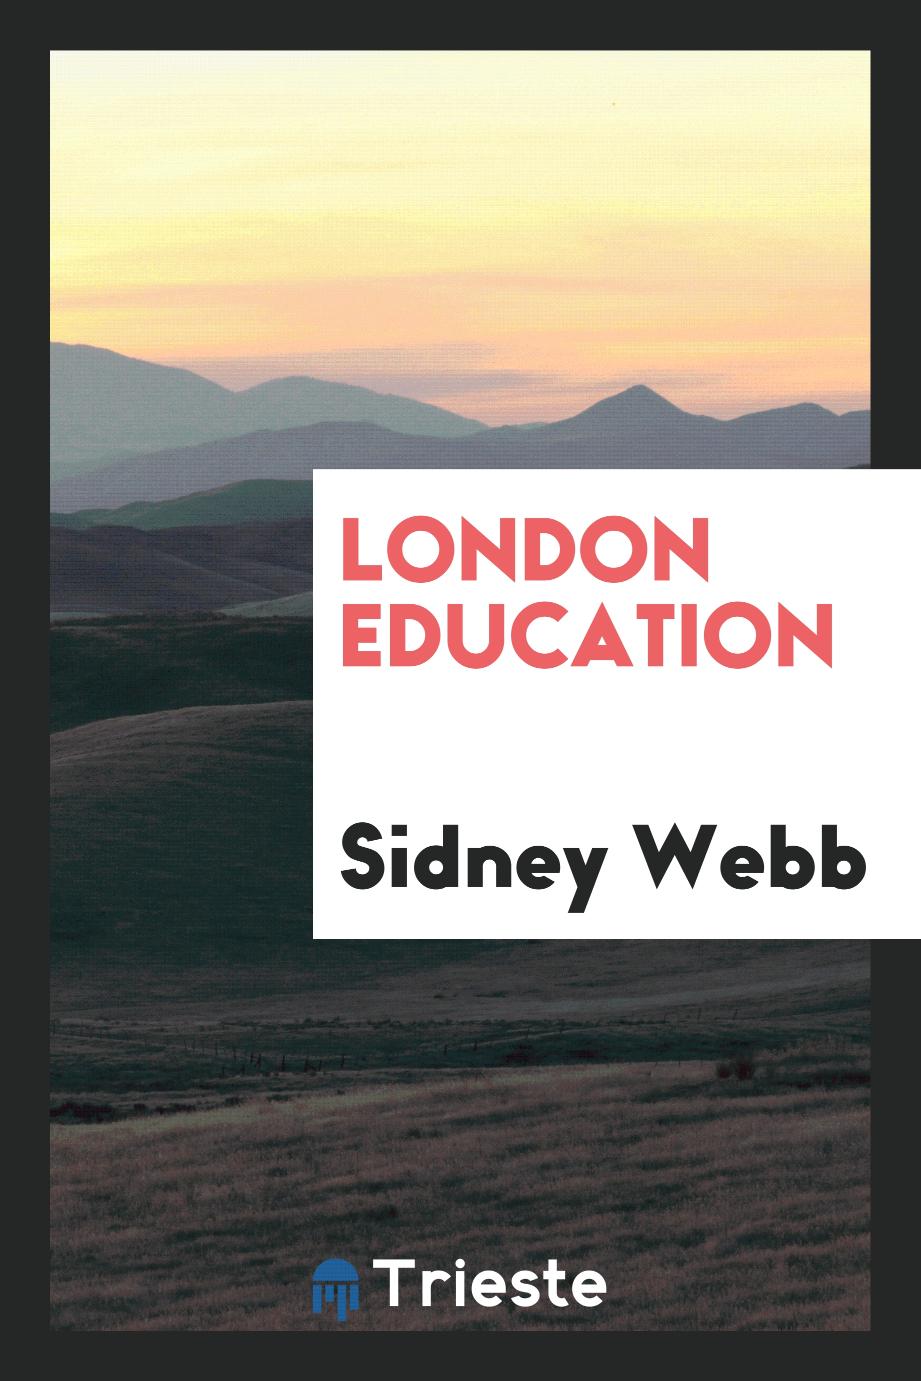 London education